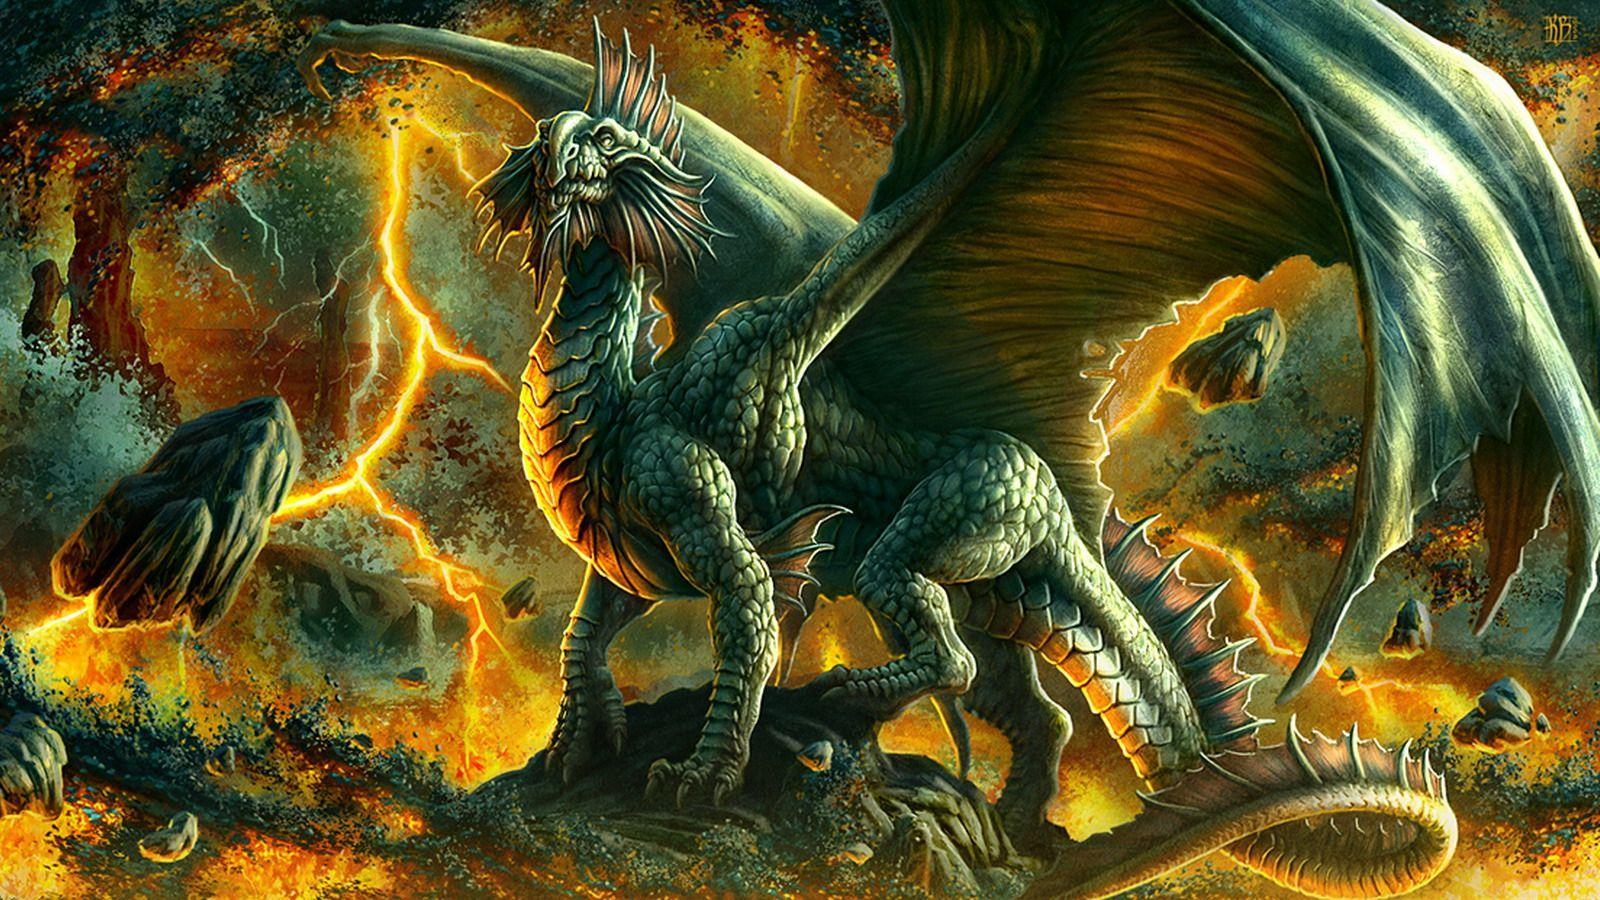 Lightning Dragon. Black Lightning Dragon Wallpaper Green dragon